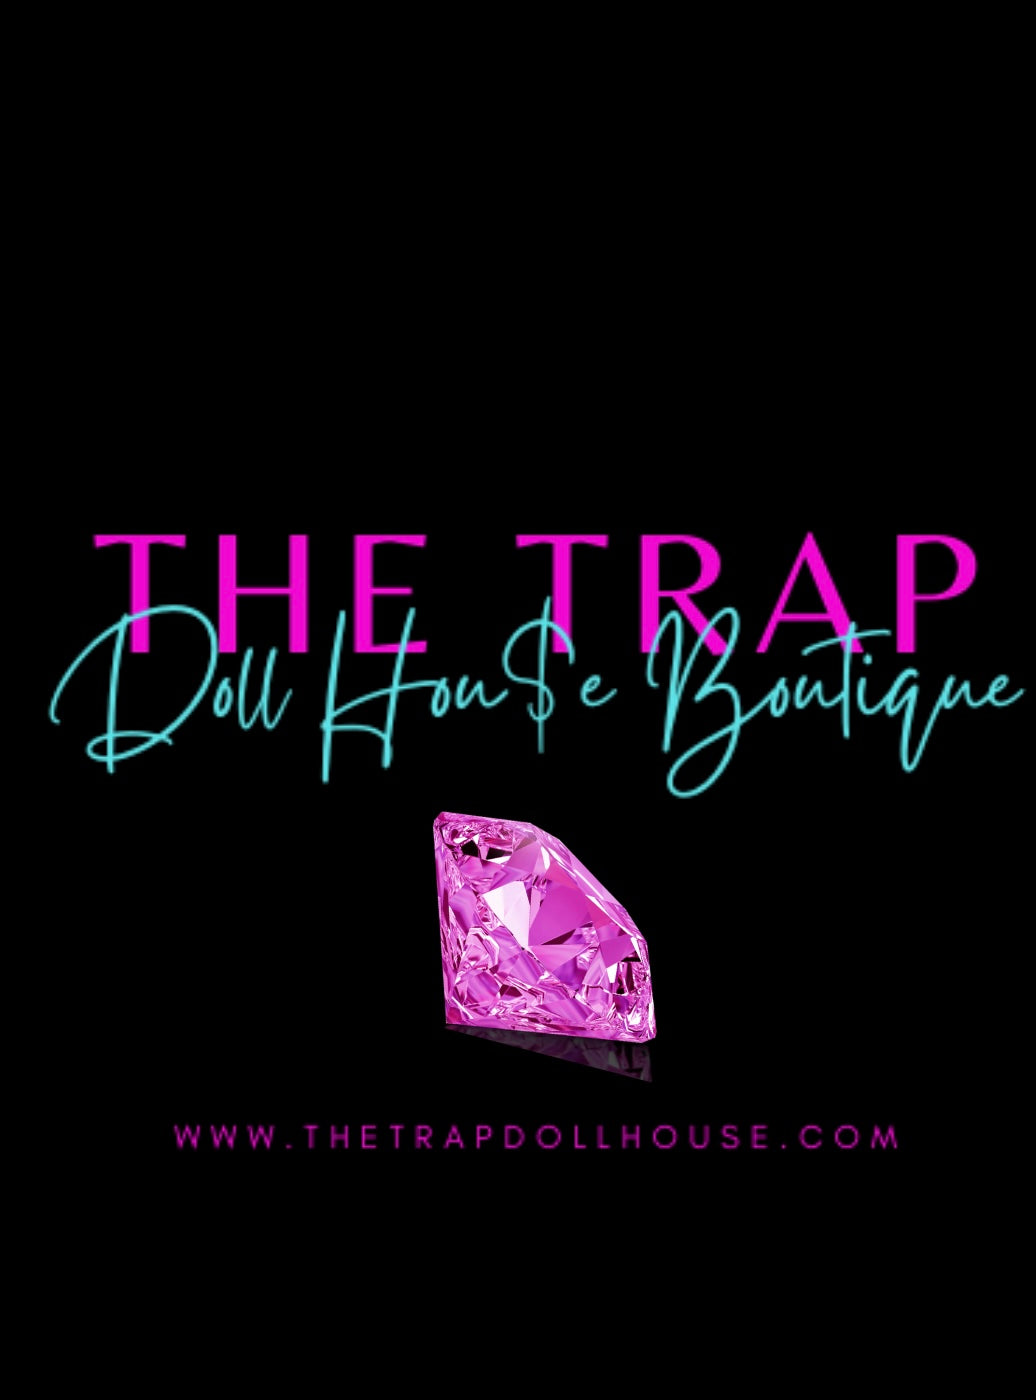 The Trap Doll Hou$e Boutique 